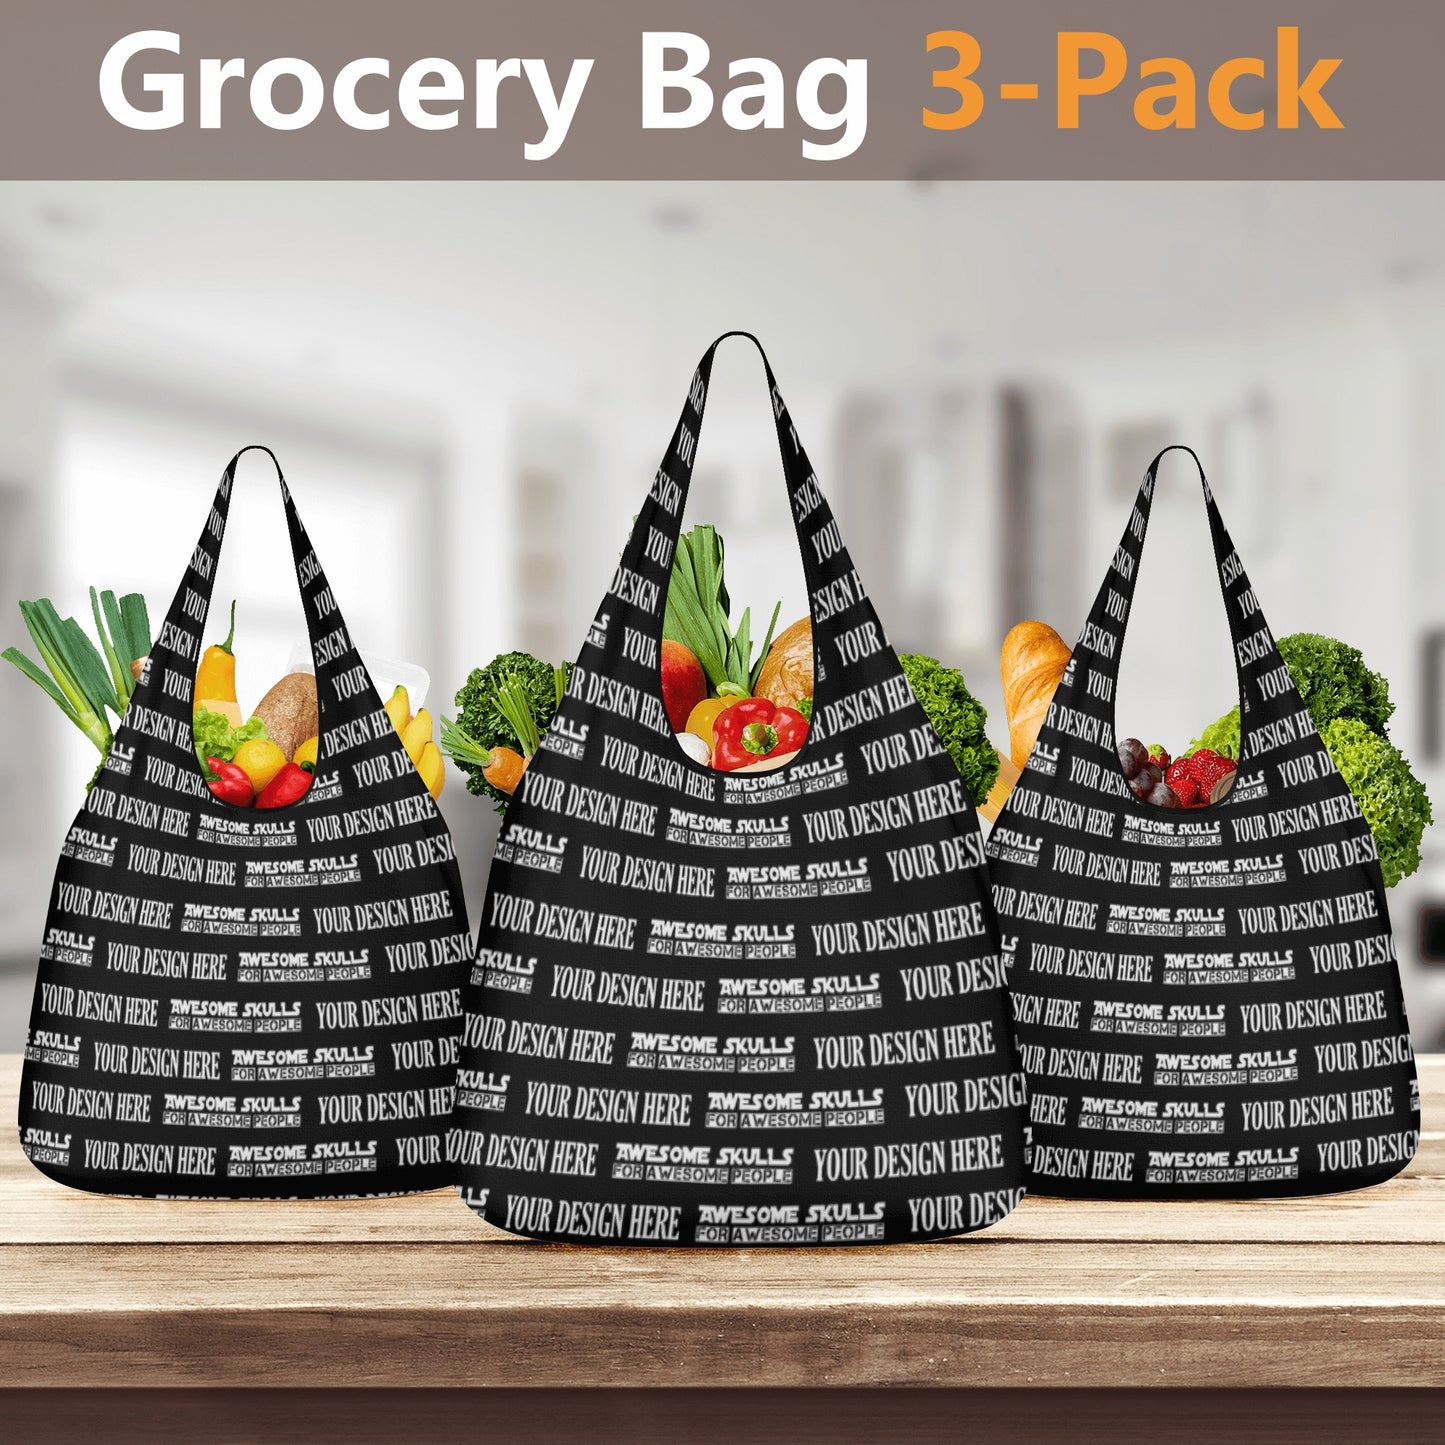 Custom Print on demand POD 3 Pack of Grocery Bags